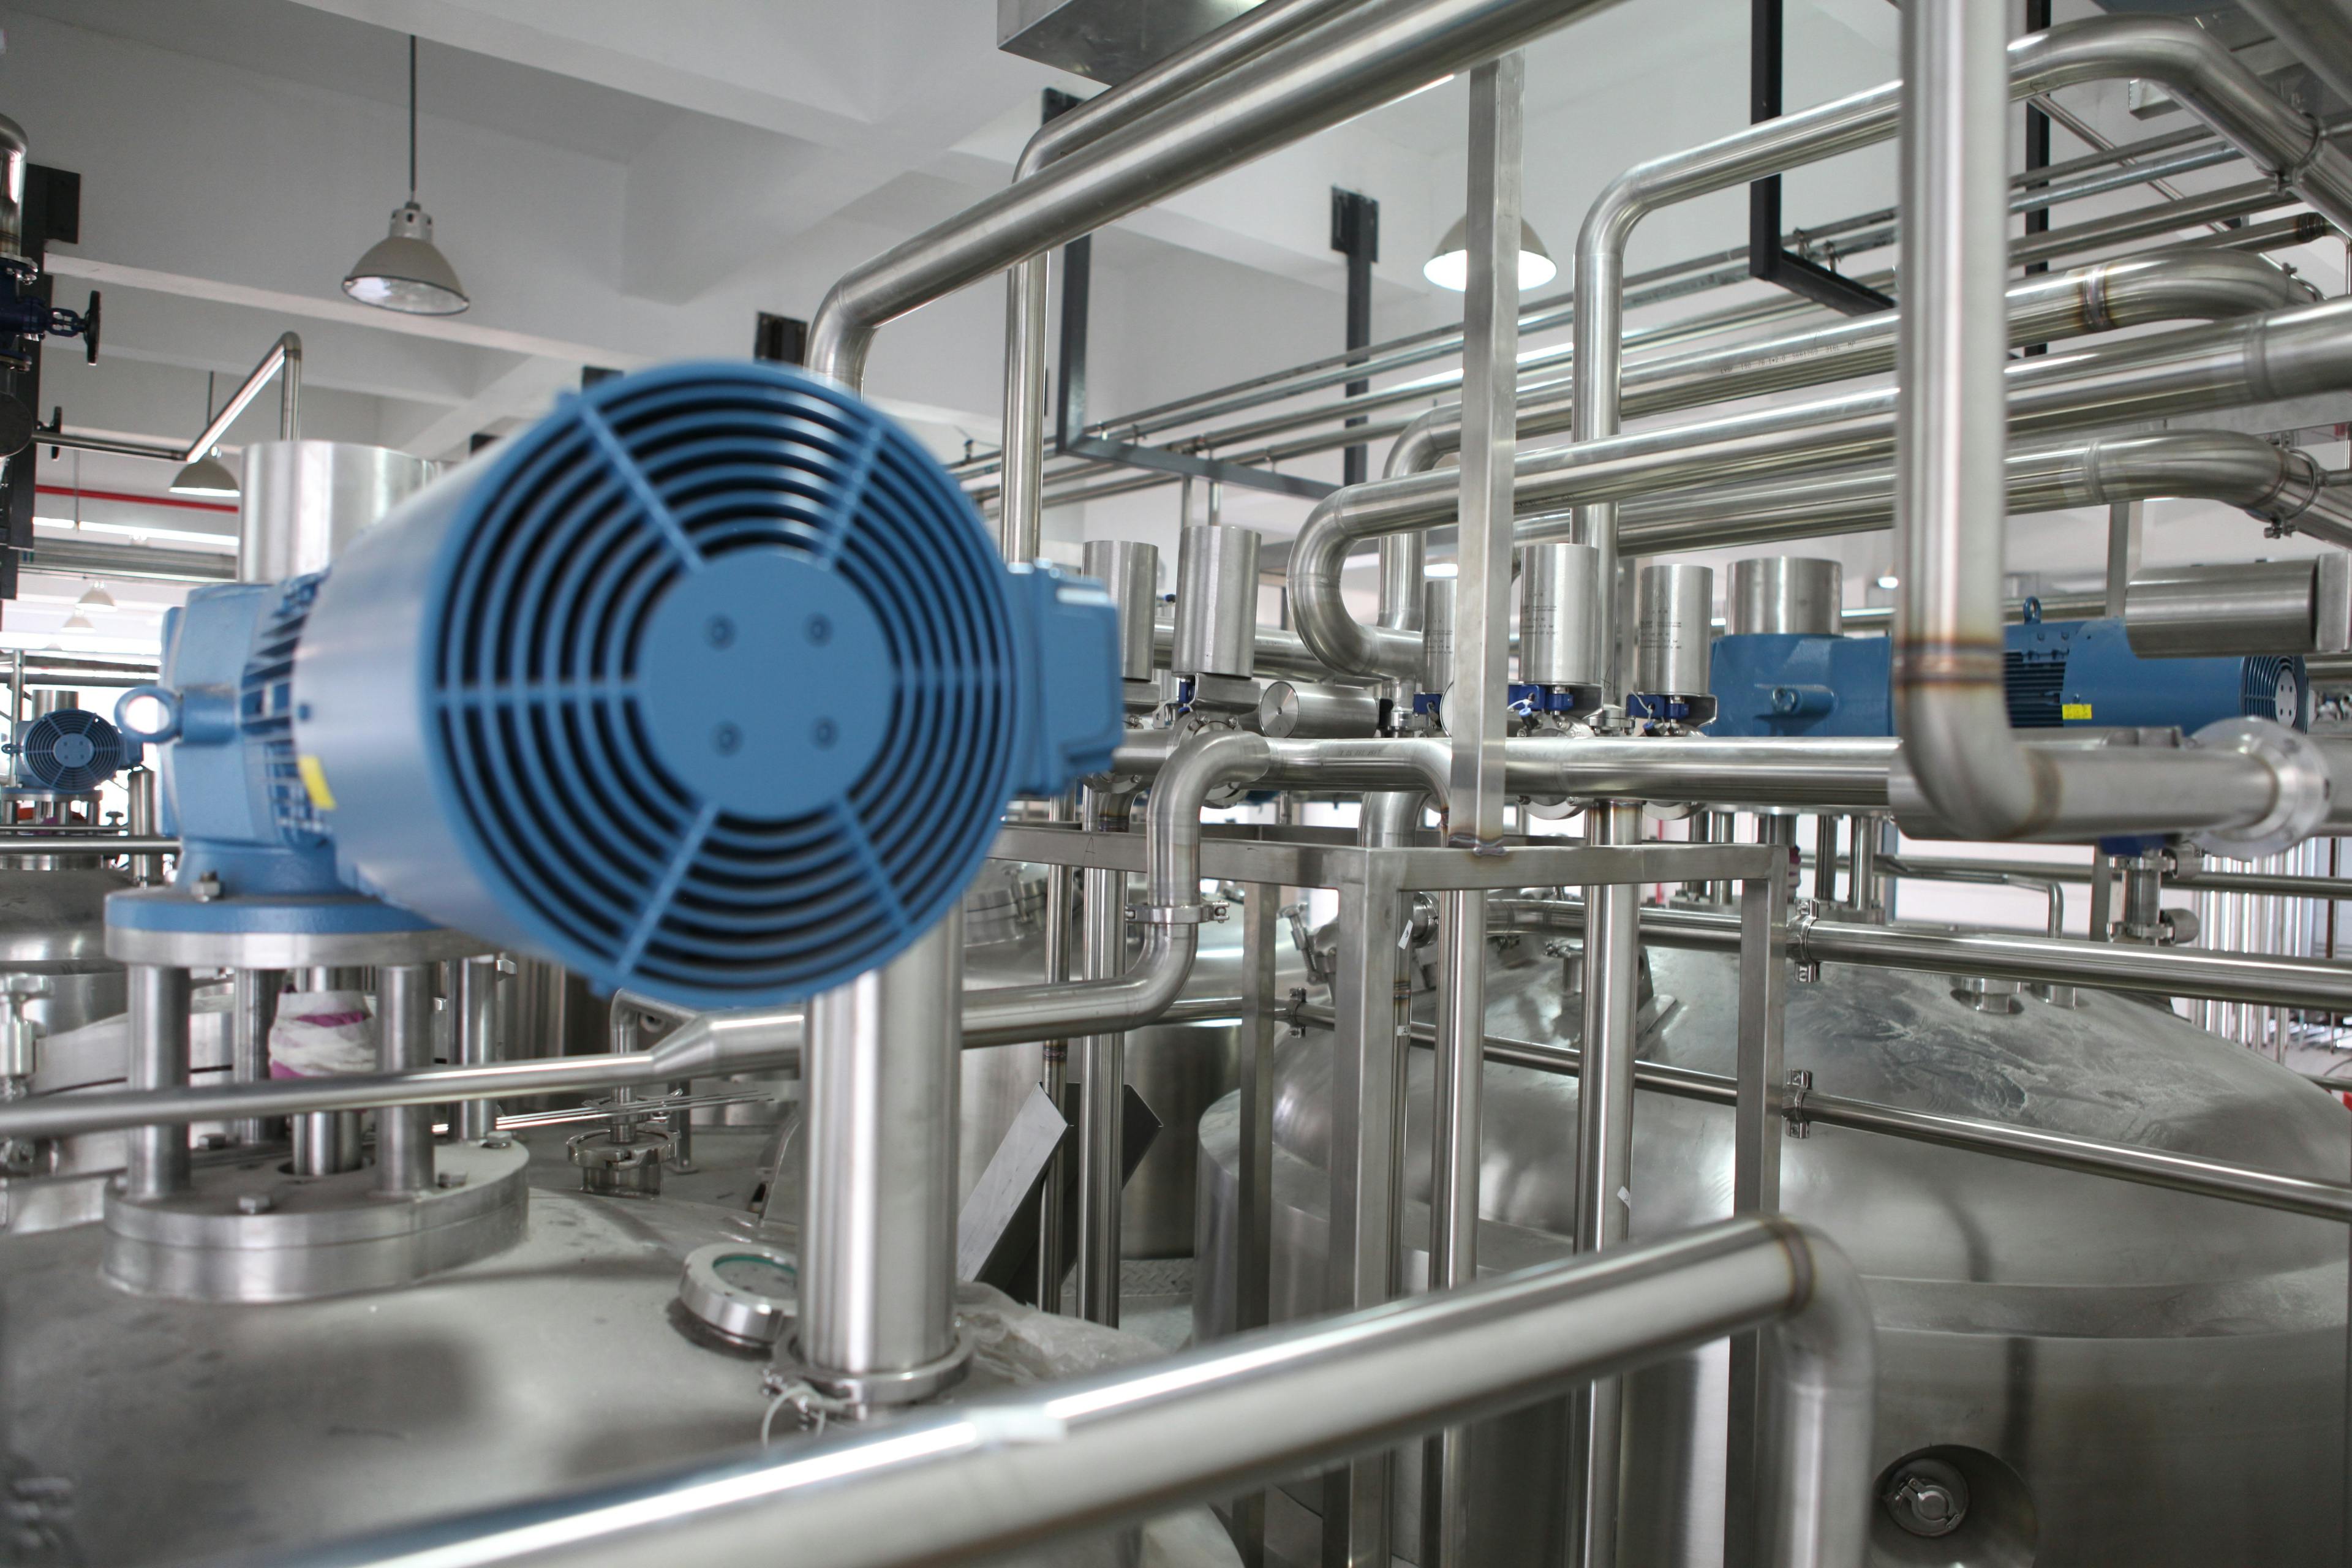 Decarbonize low-temperature industrial heat with heat pumps